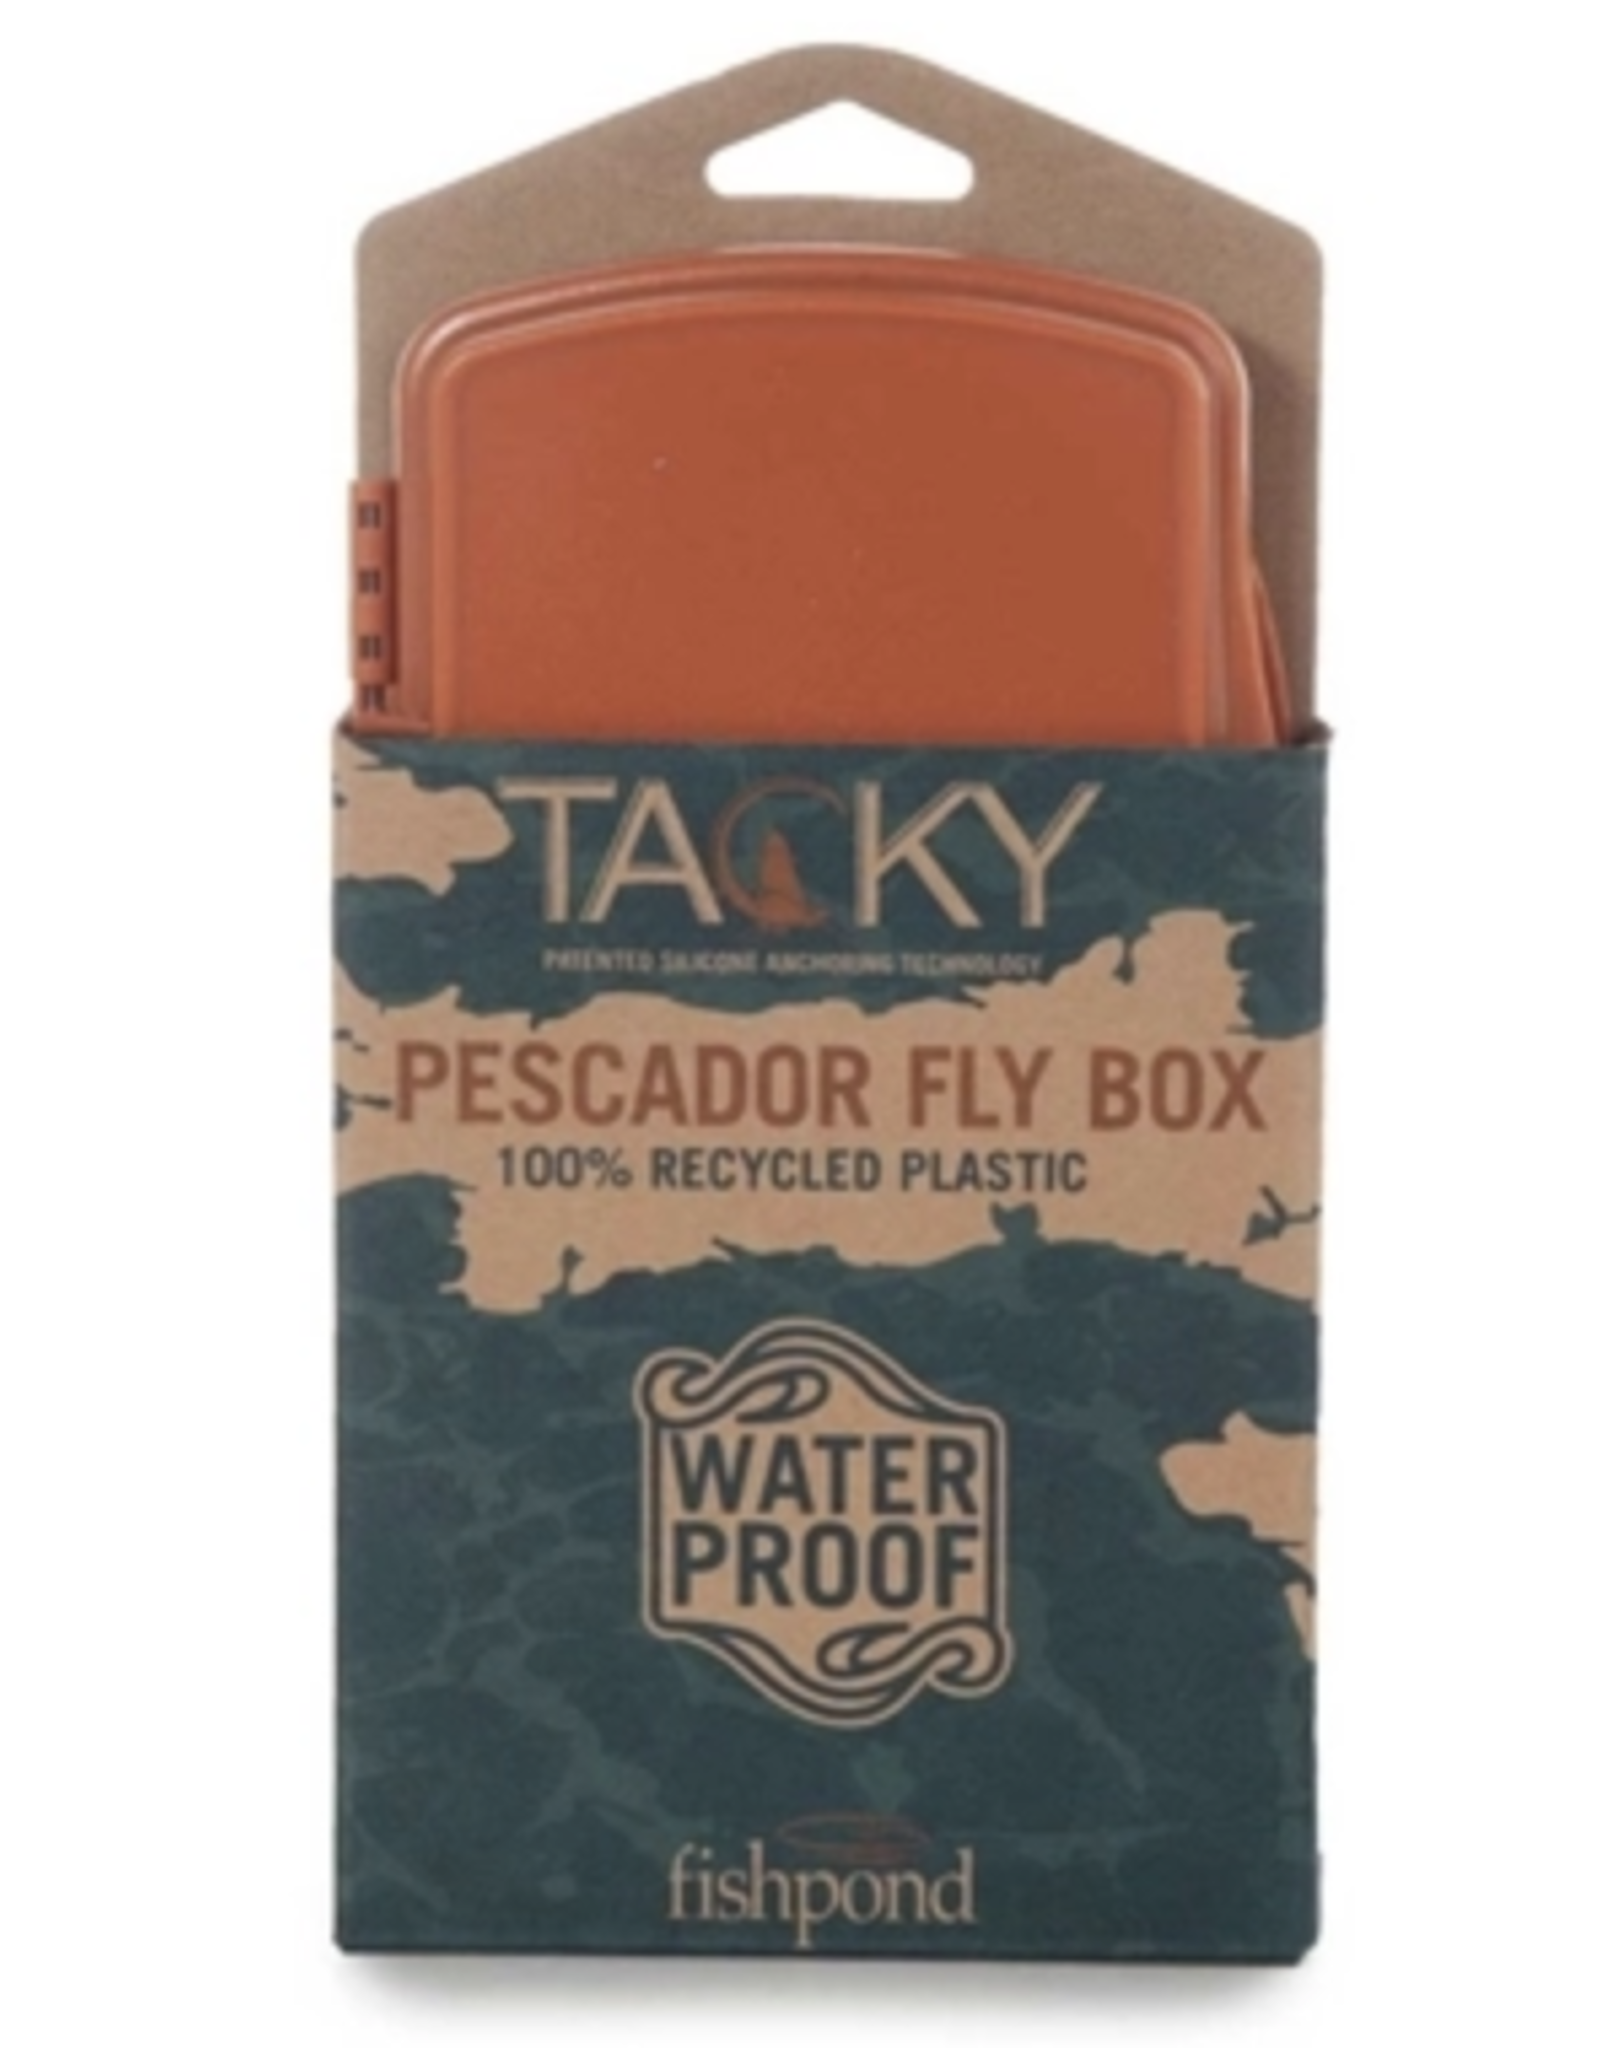 Fishpond Tacky Pescador Fly Box - Burnt Orange